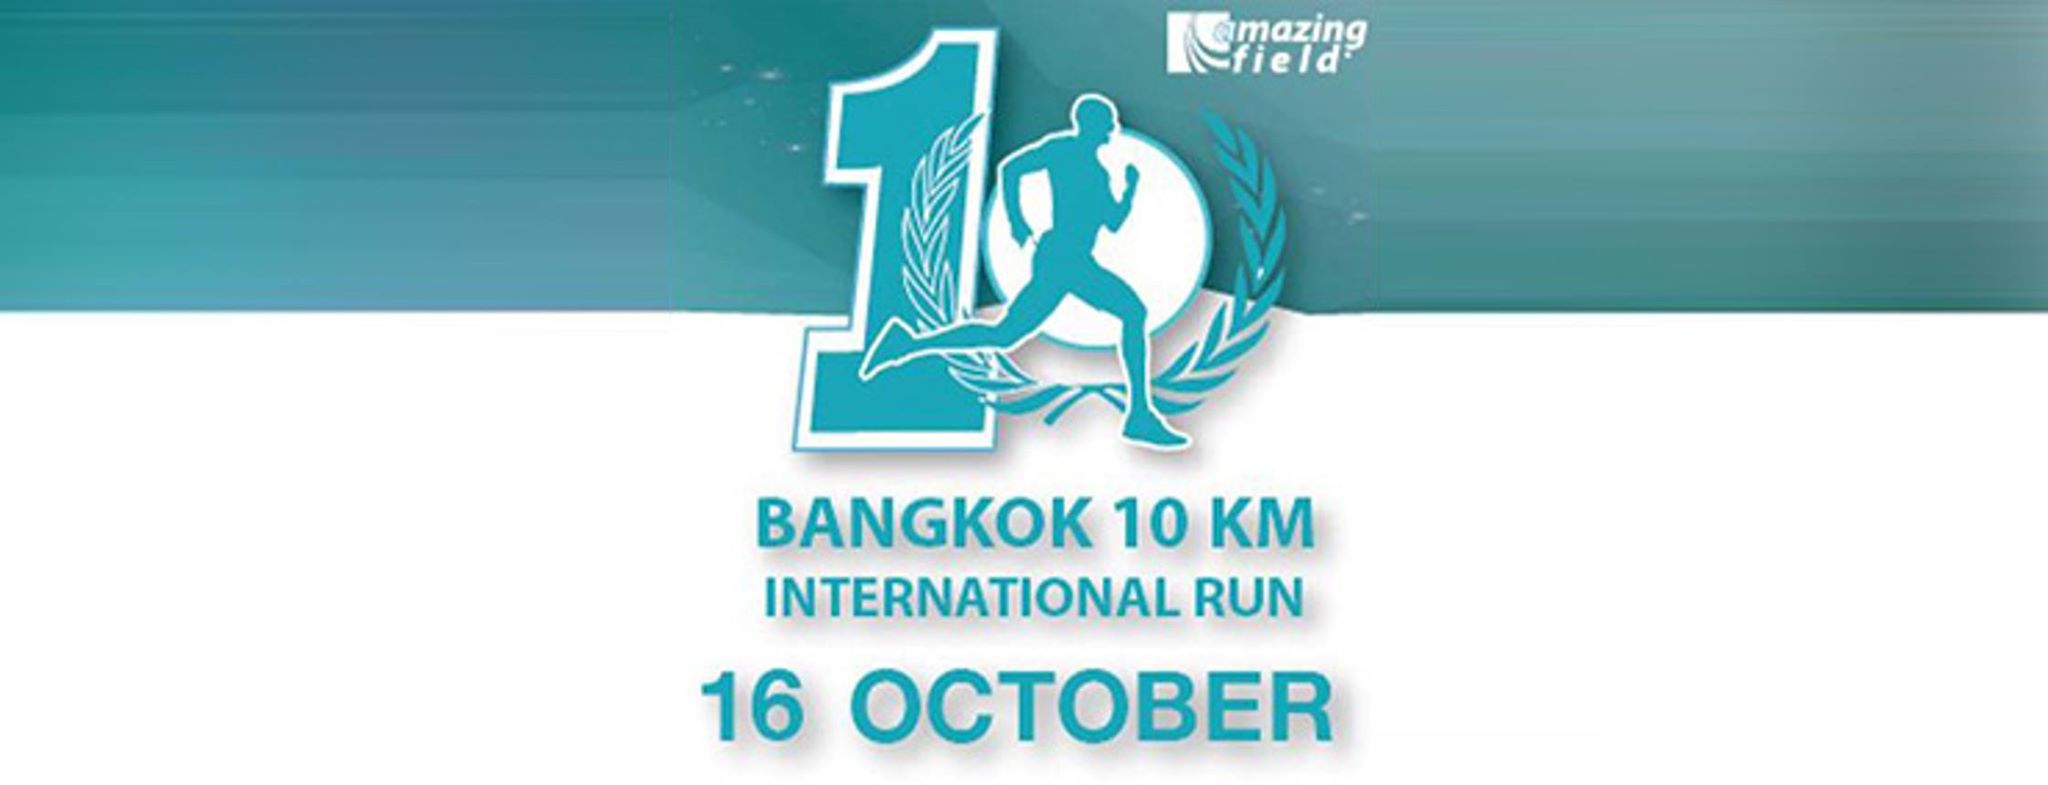 download 10 km run